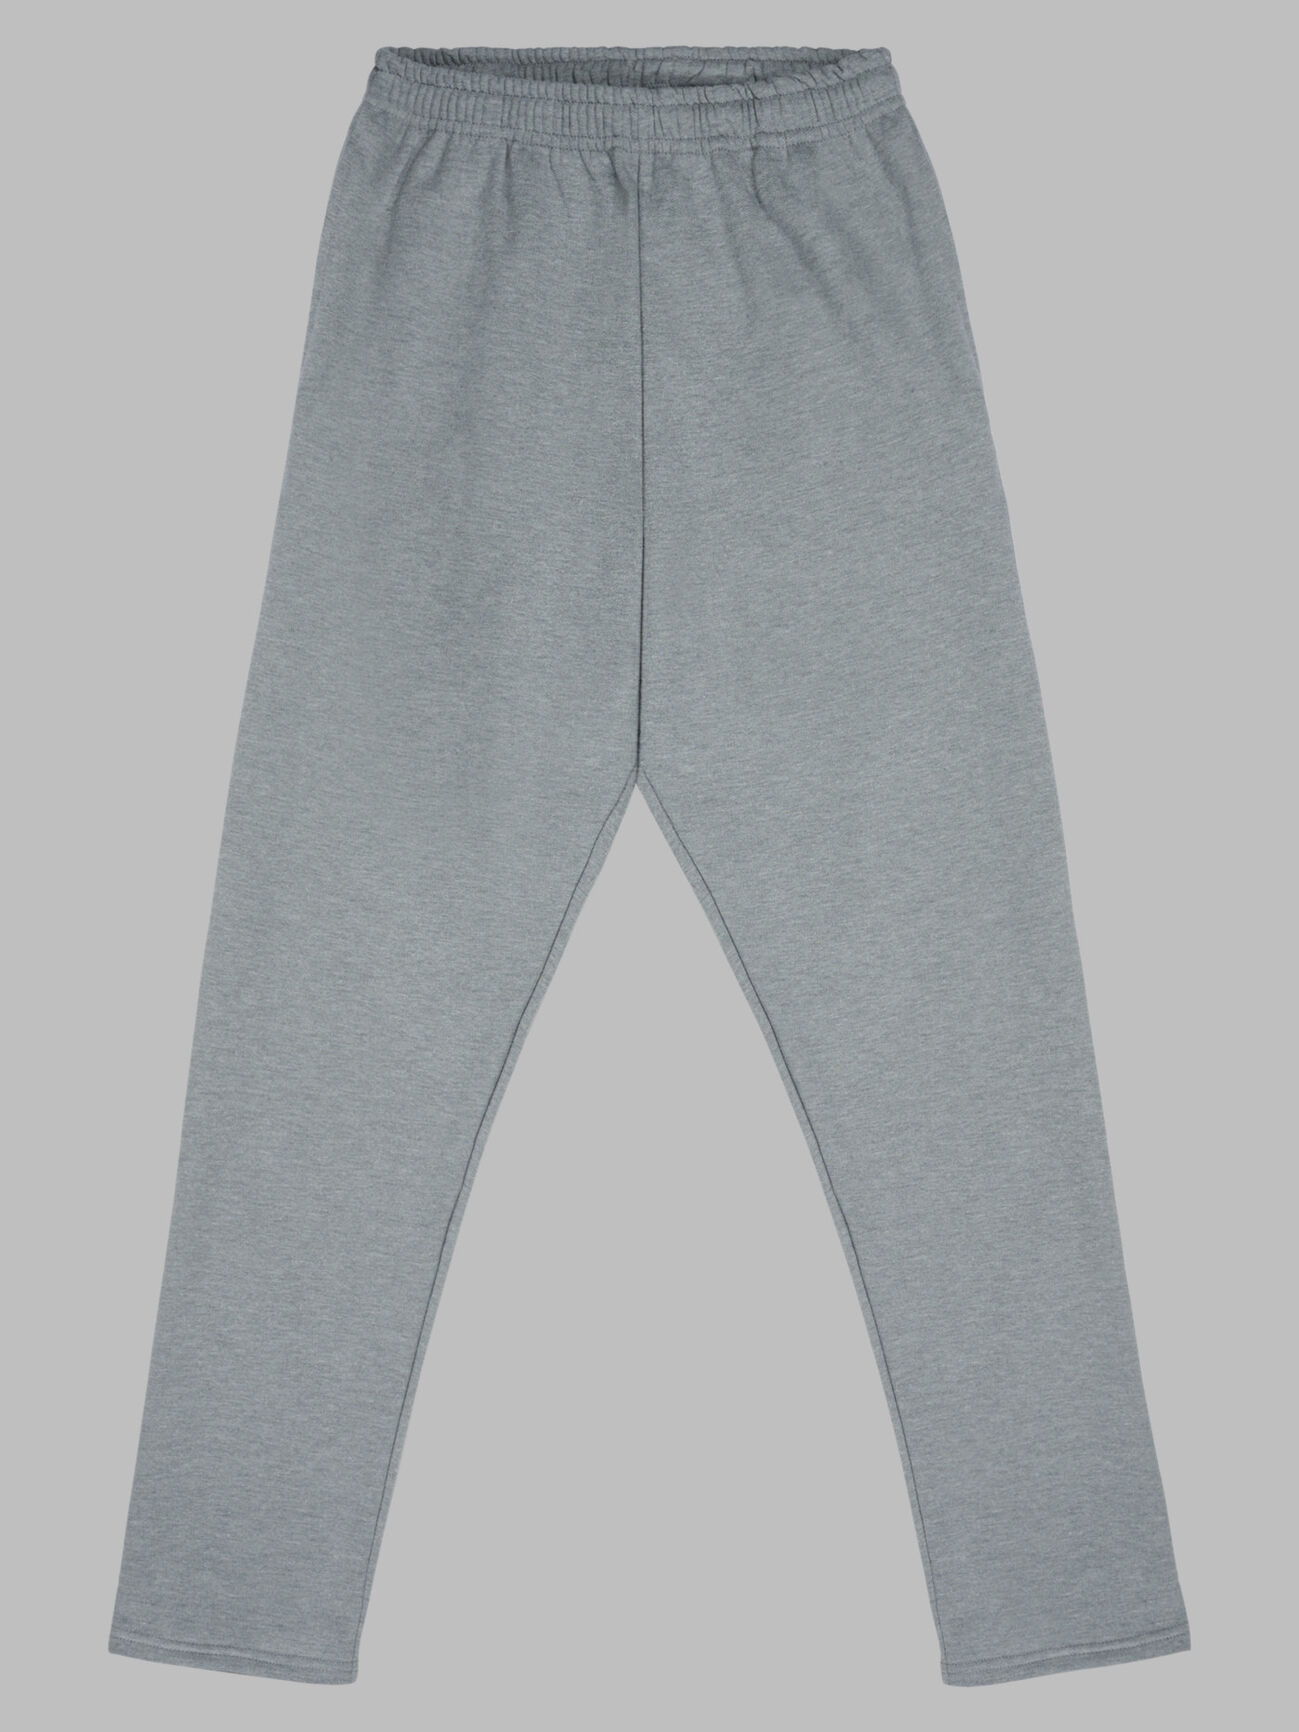 Fruit of the loom Classic Open Hem Sweatpants › Grey (F481) › 3 Colors